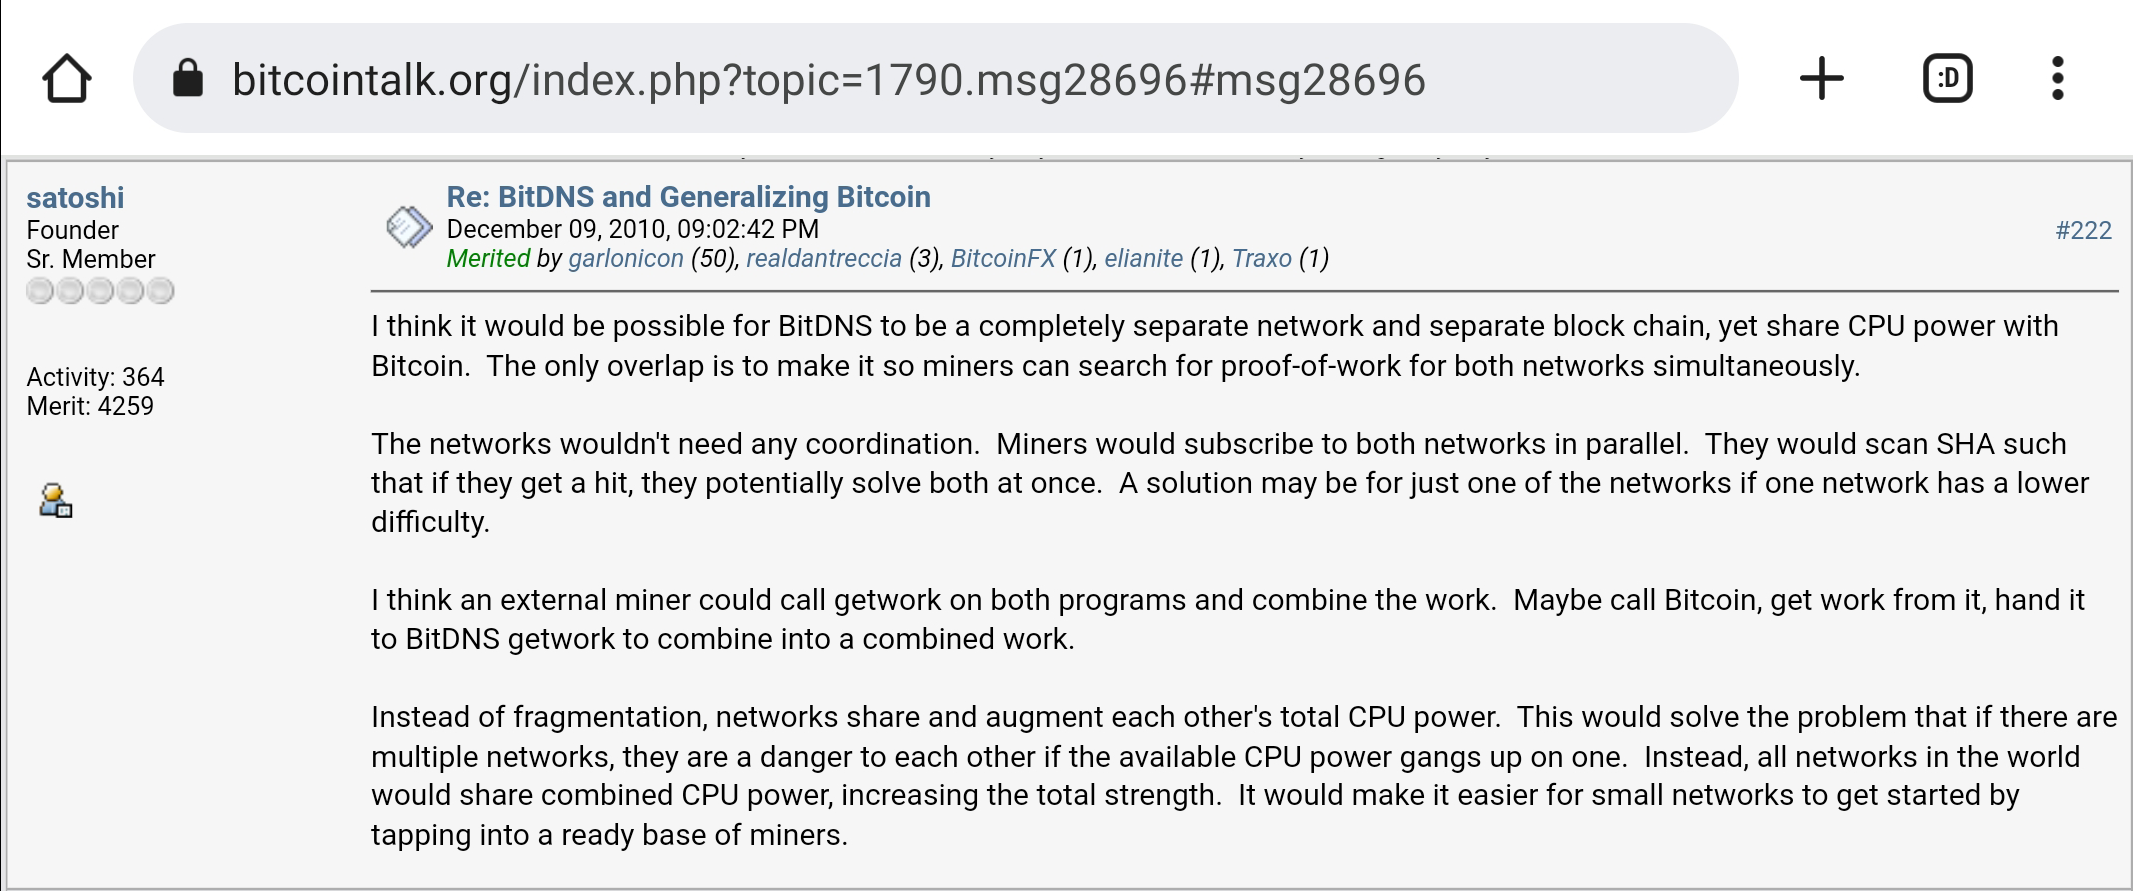 Satoshi Nakamoto contibuting on Bitcointalk to BitDNS